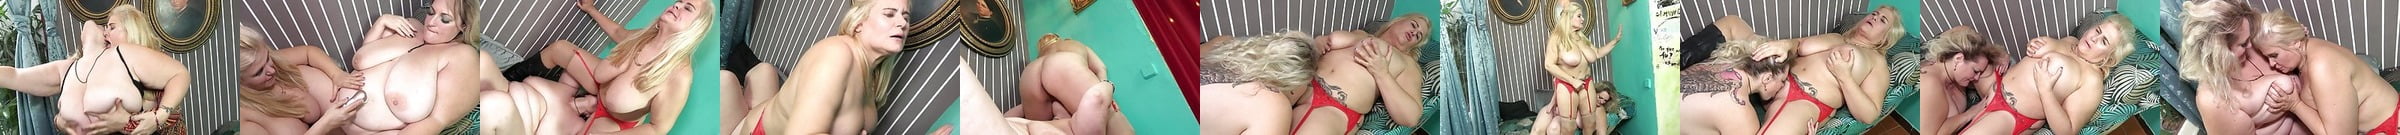 Shania Twain Hüllenlos Geleakte Sex Videos And Nacktbilder Xhamster